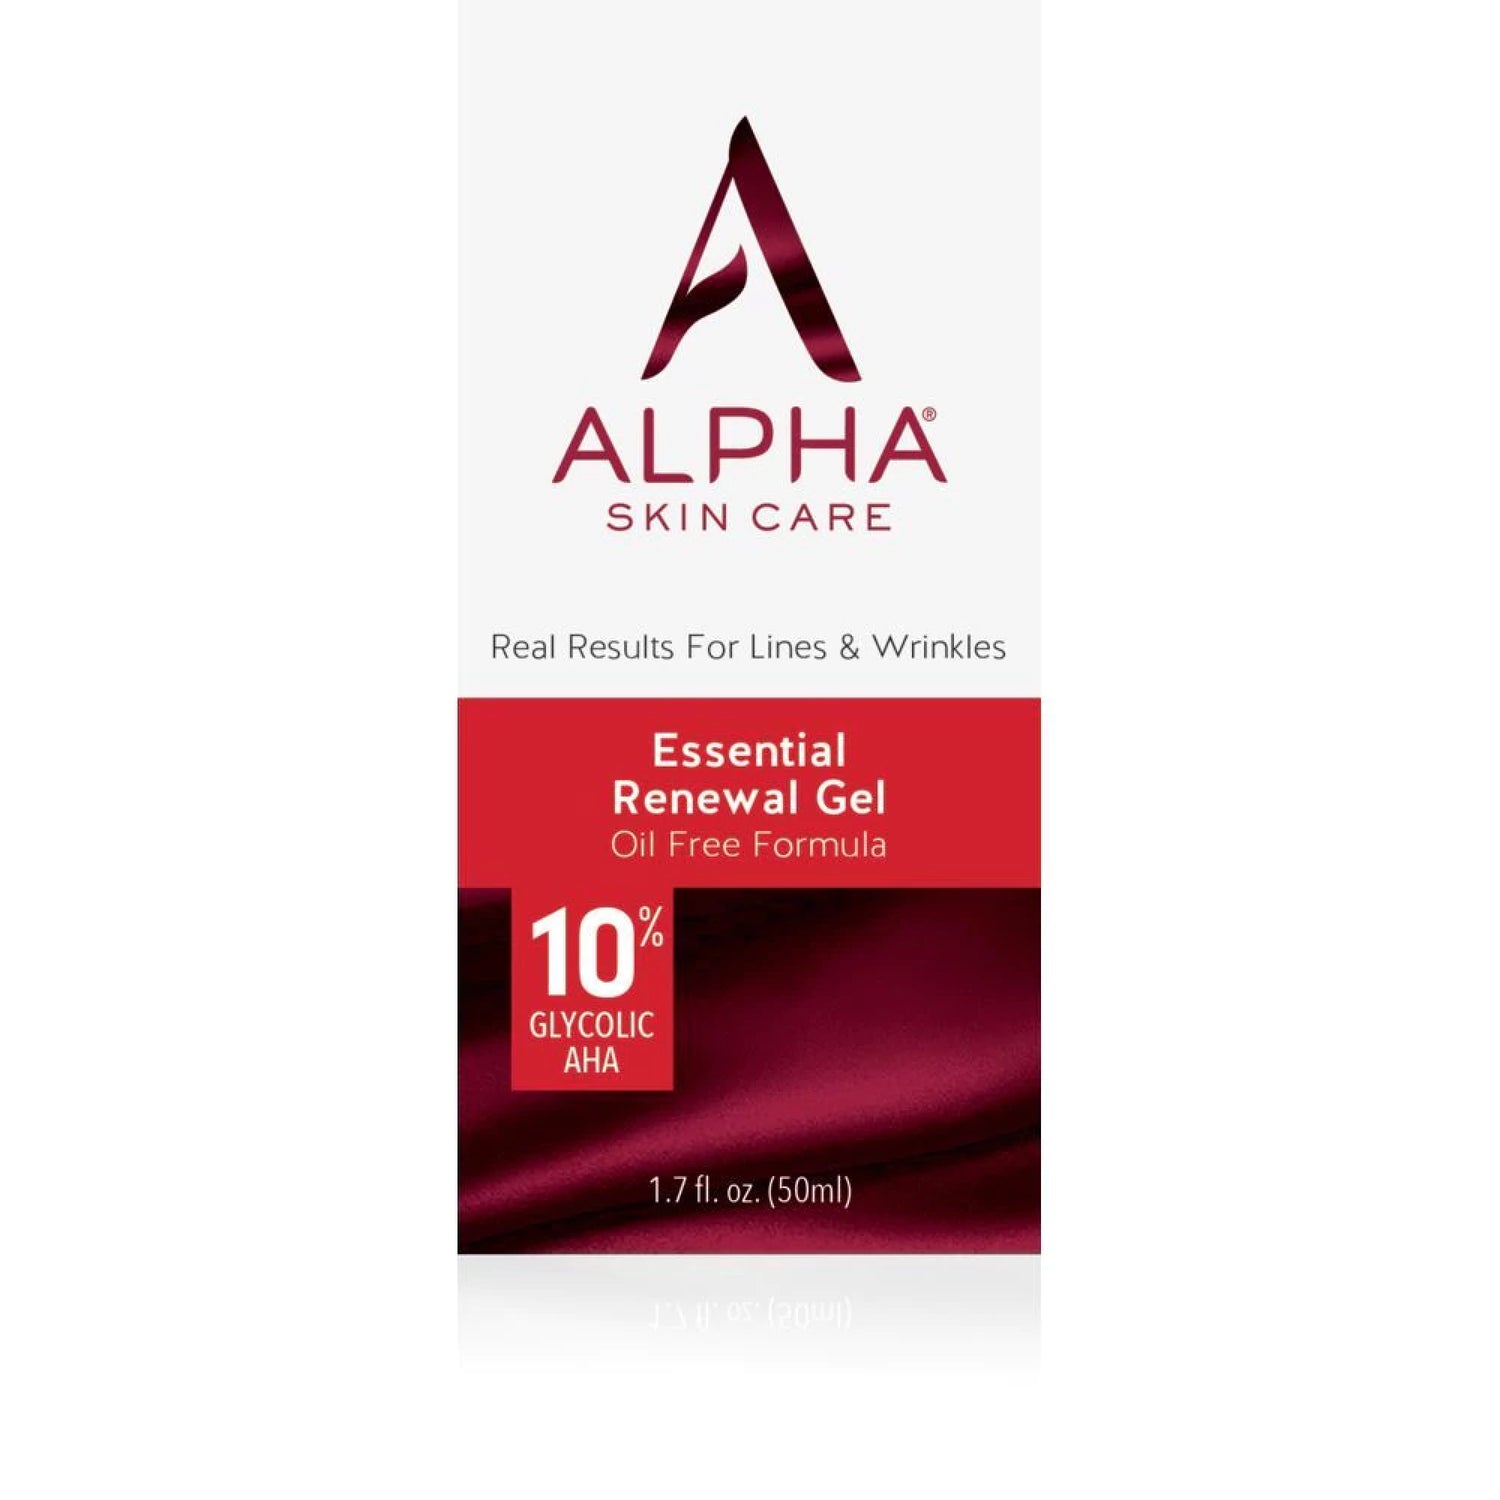 Essential Renewal Gel with 10% AHA